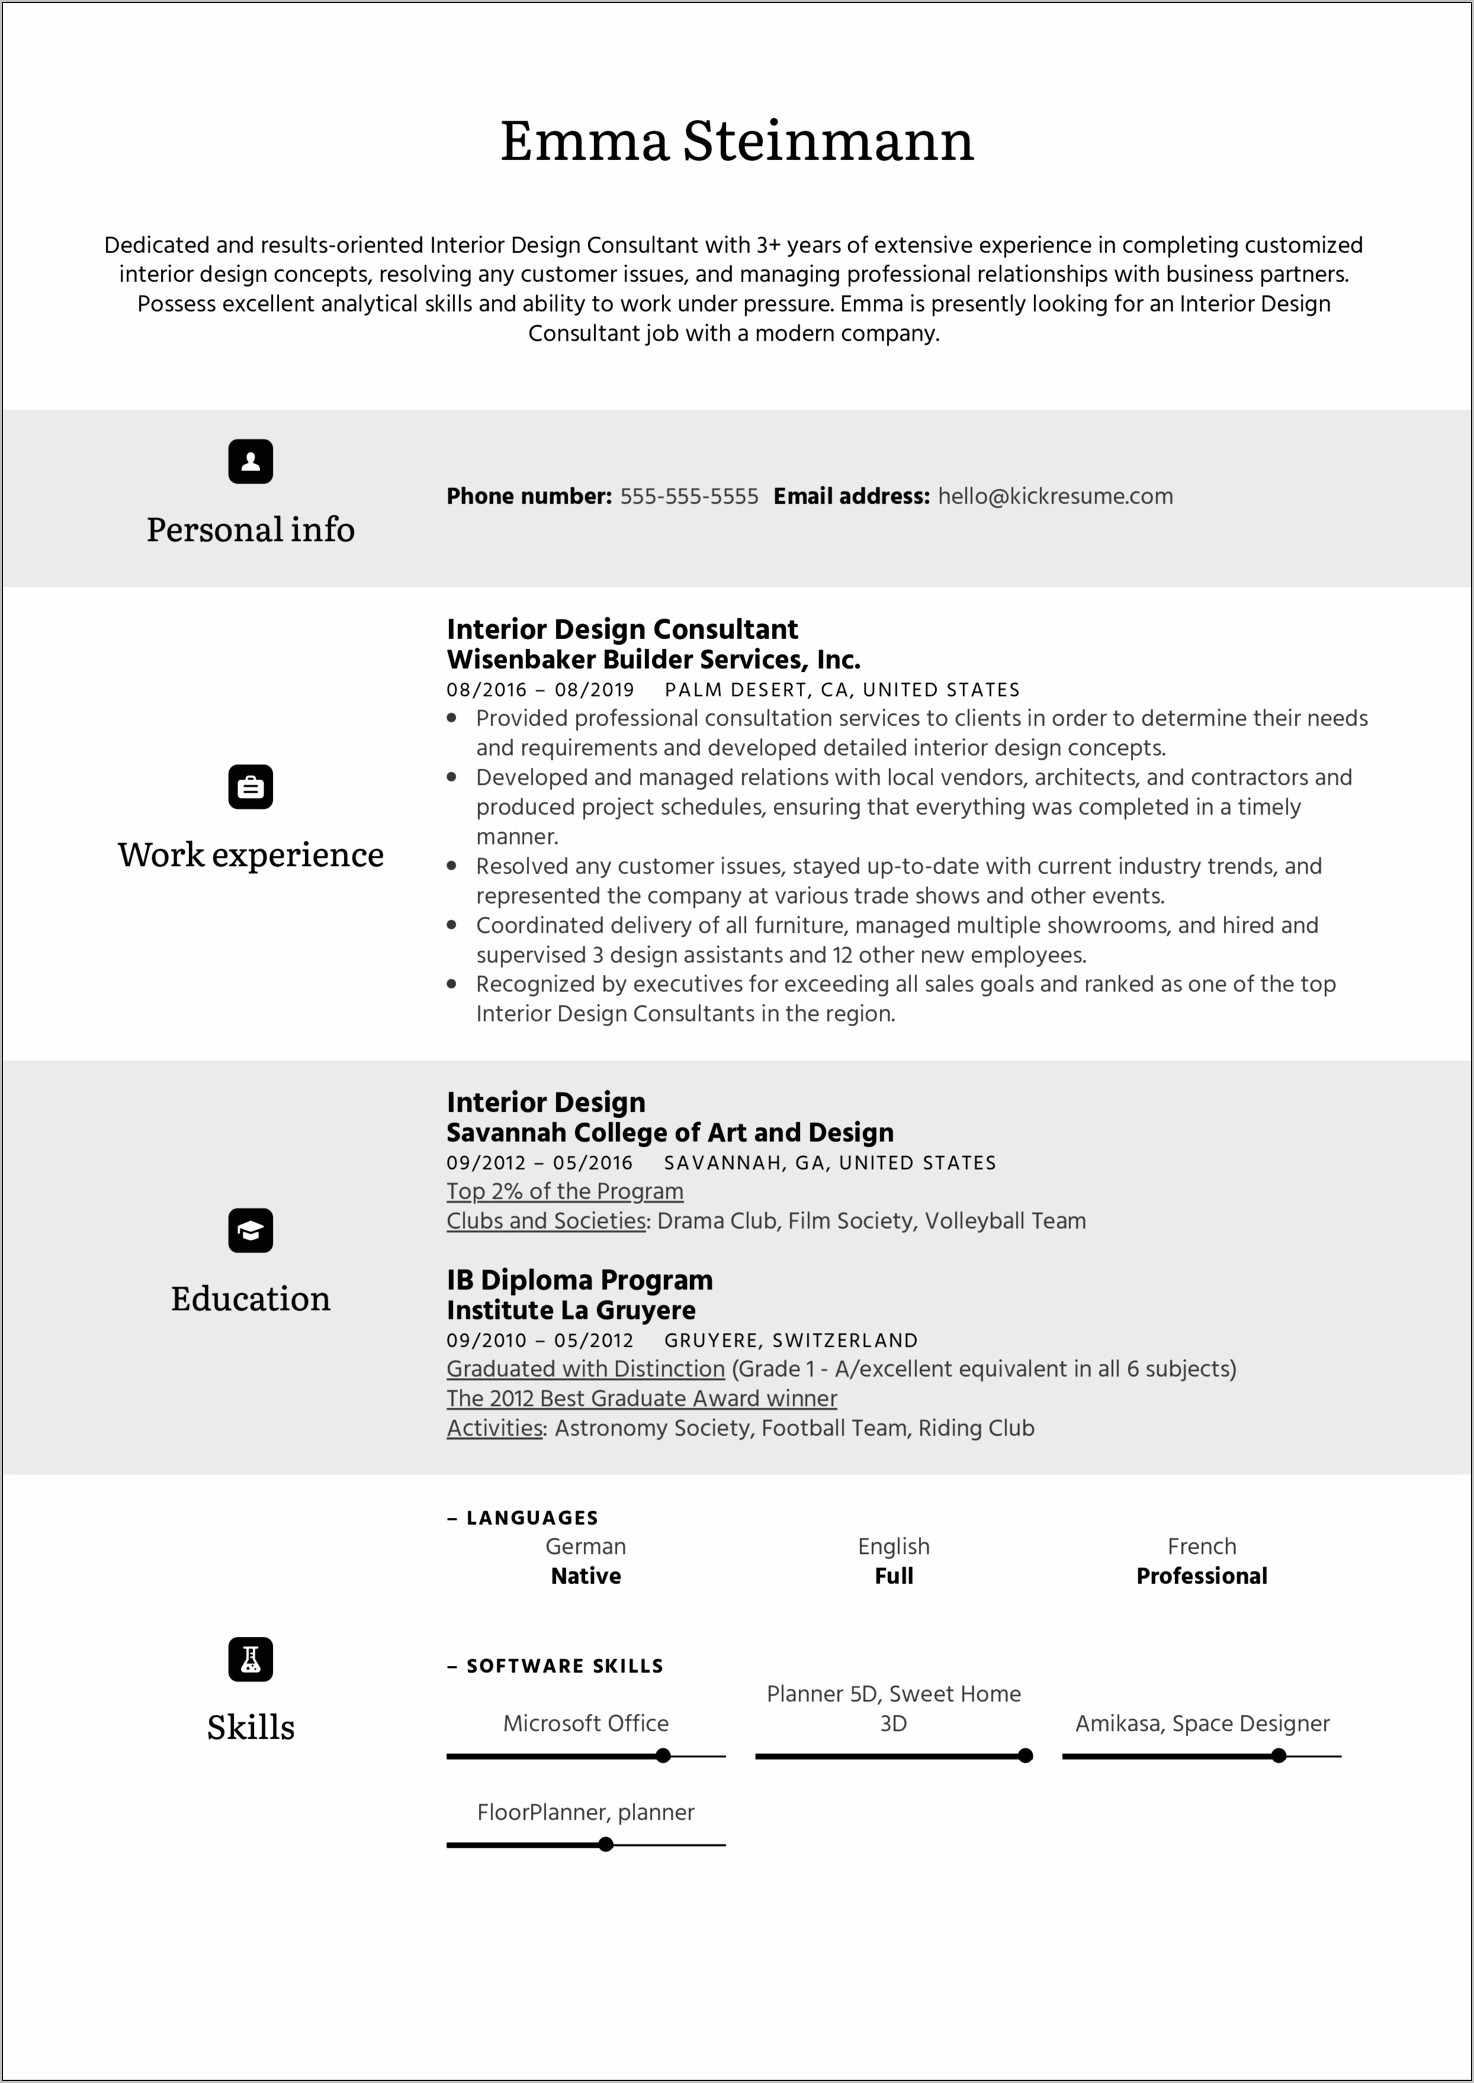 Design Consultant Job Resume Objective